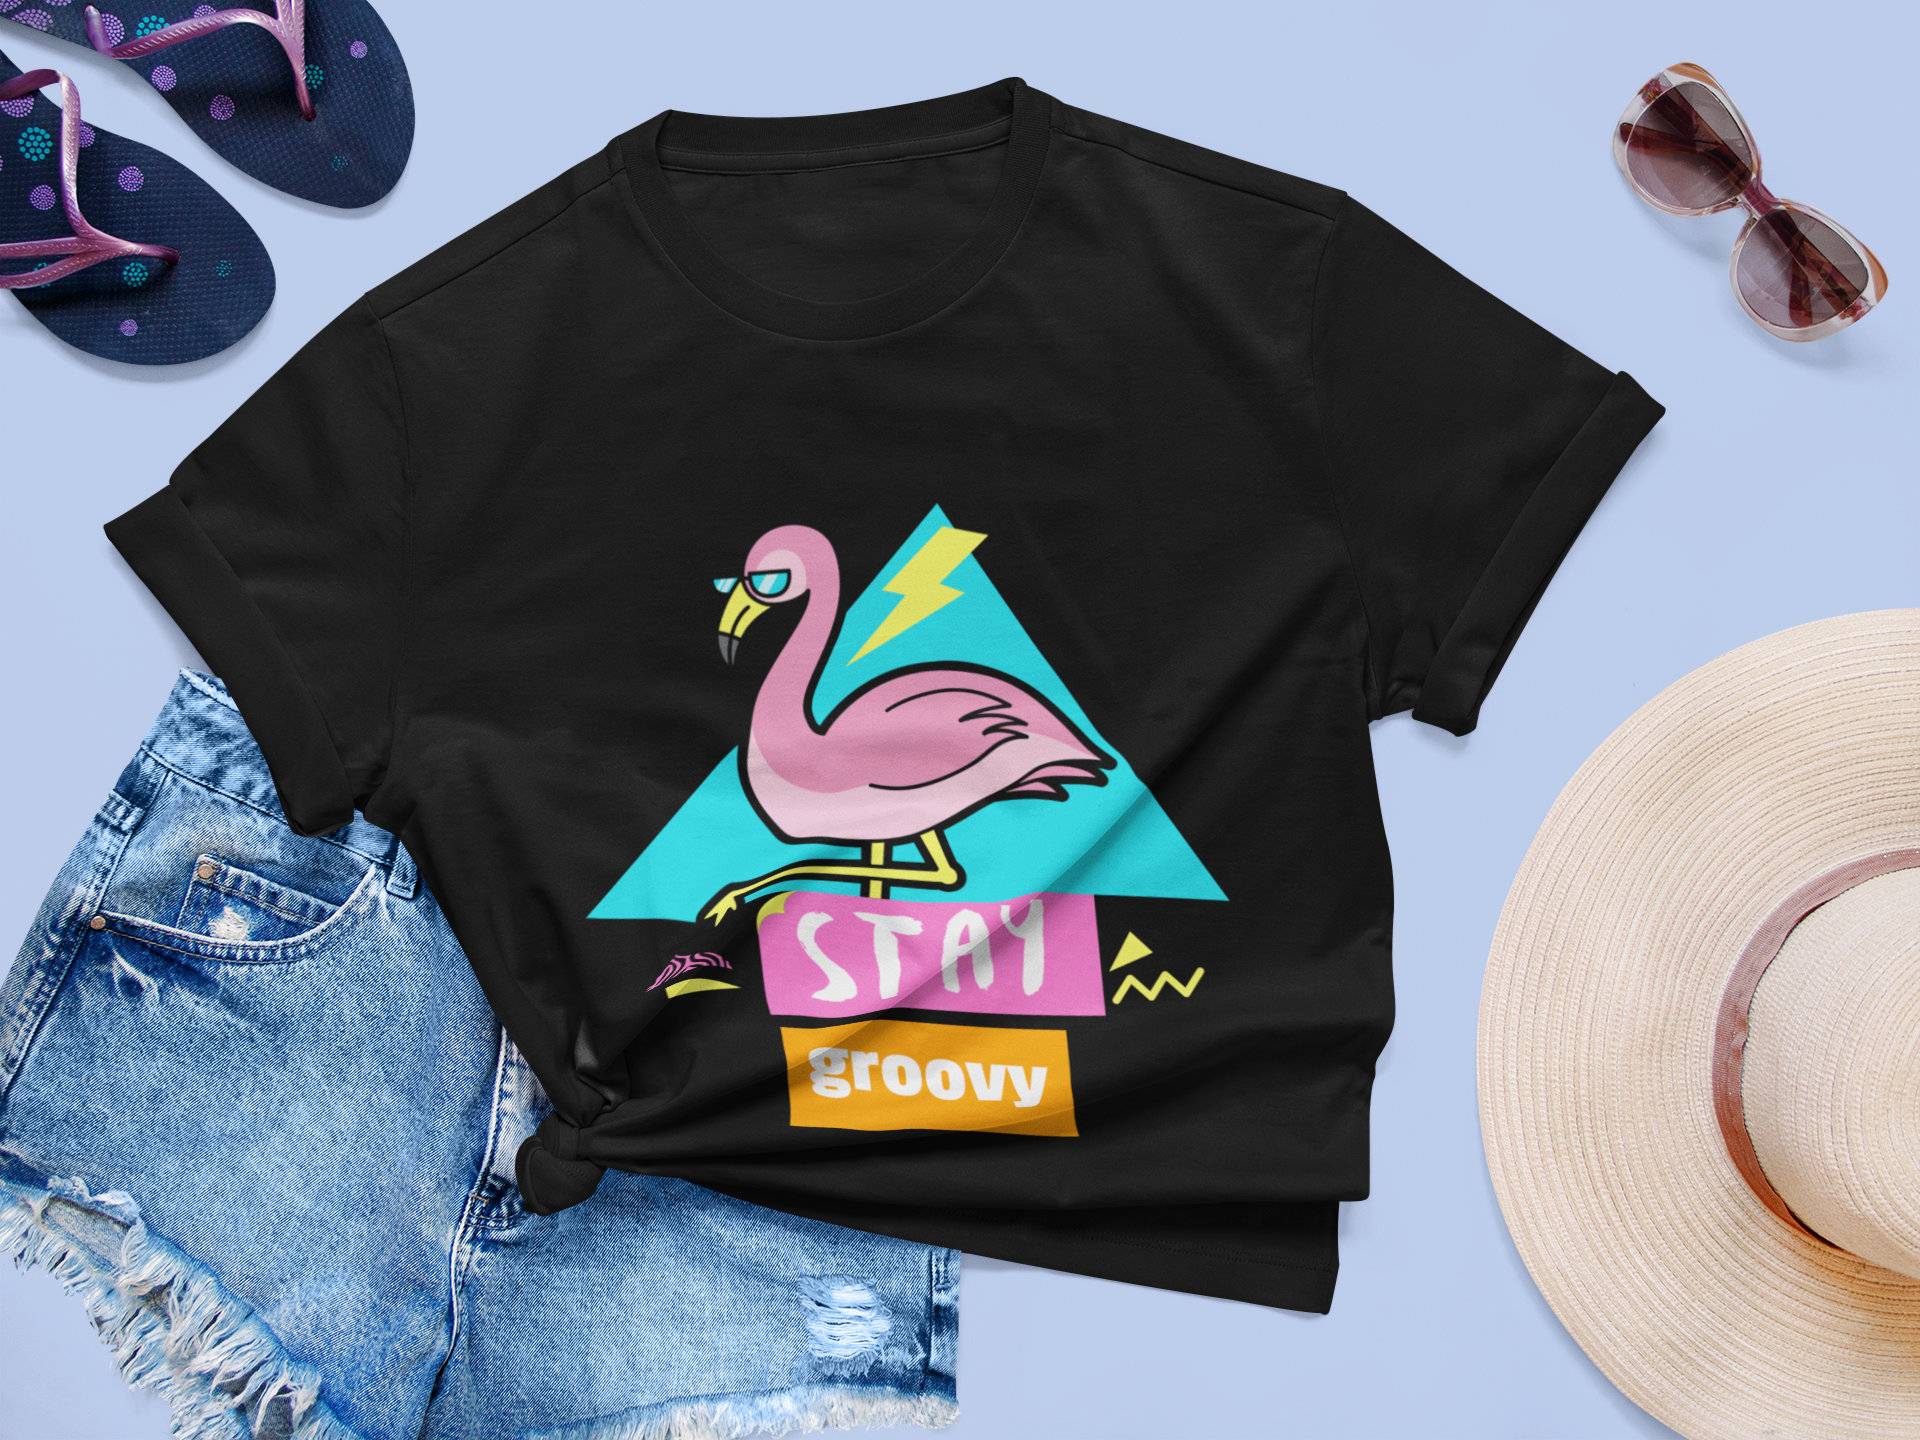 stay Groovy Tshirt, Distressed Super Soft Bella Canvas Unisex T-Shirt, Süßes Trending Damen Shirt, Lustige Tees, Sommer Vibes, Tshirts von LiliandMattDesign